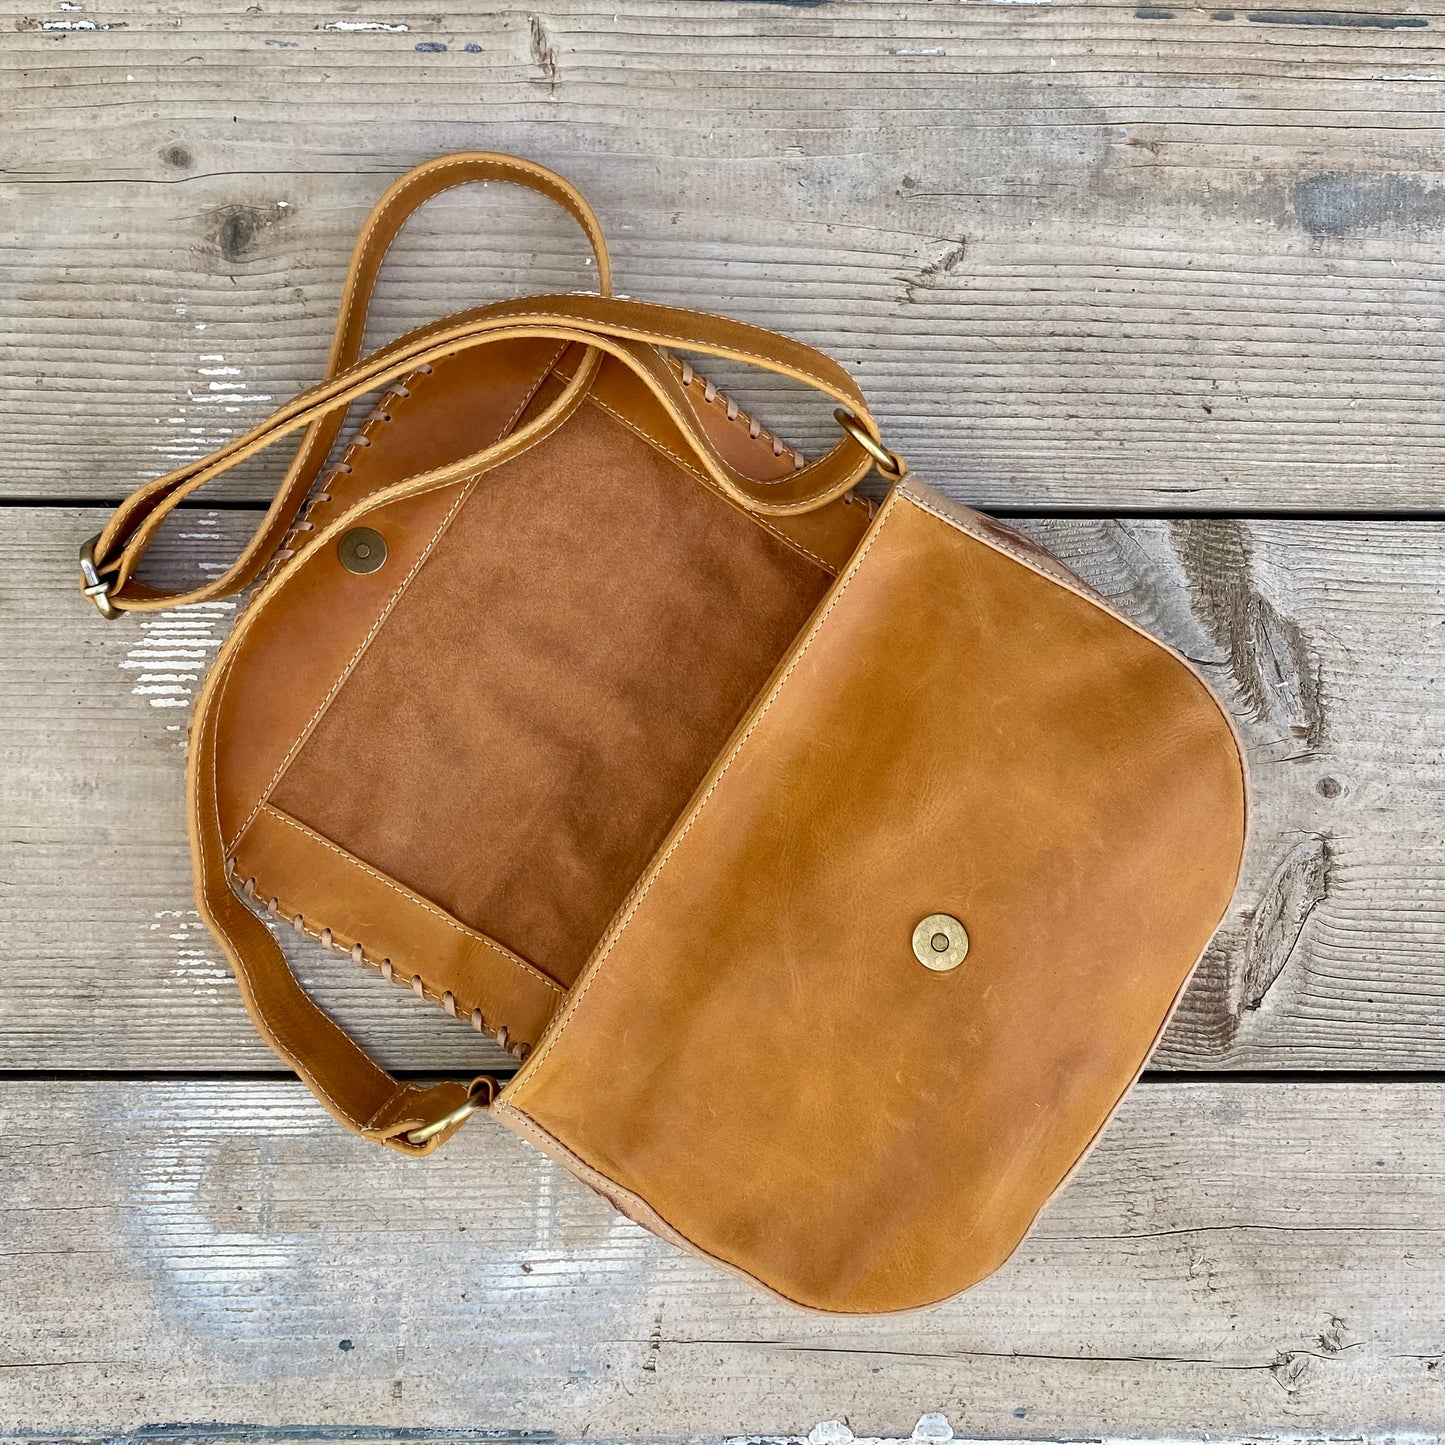 A Carved Leather Handbag